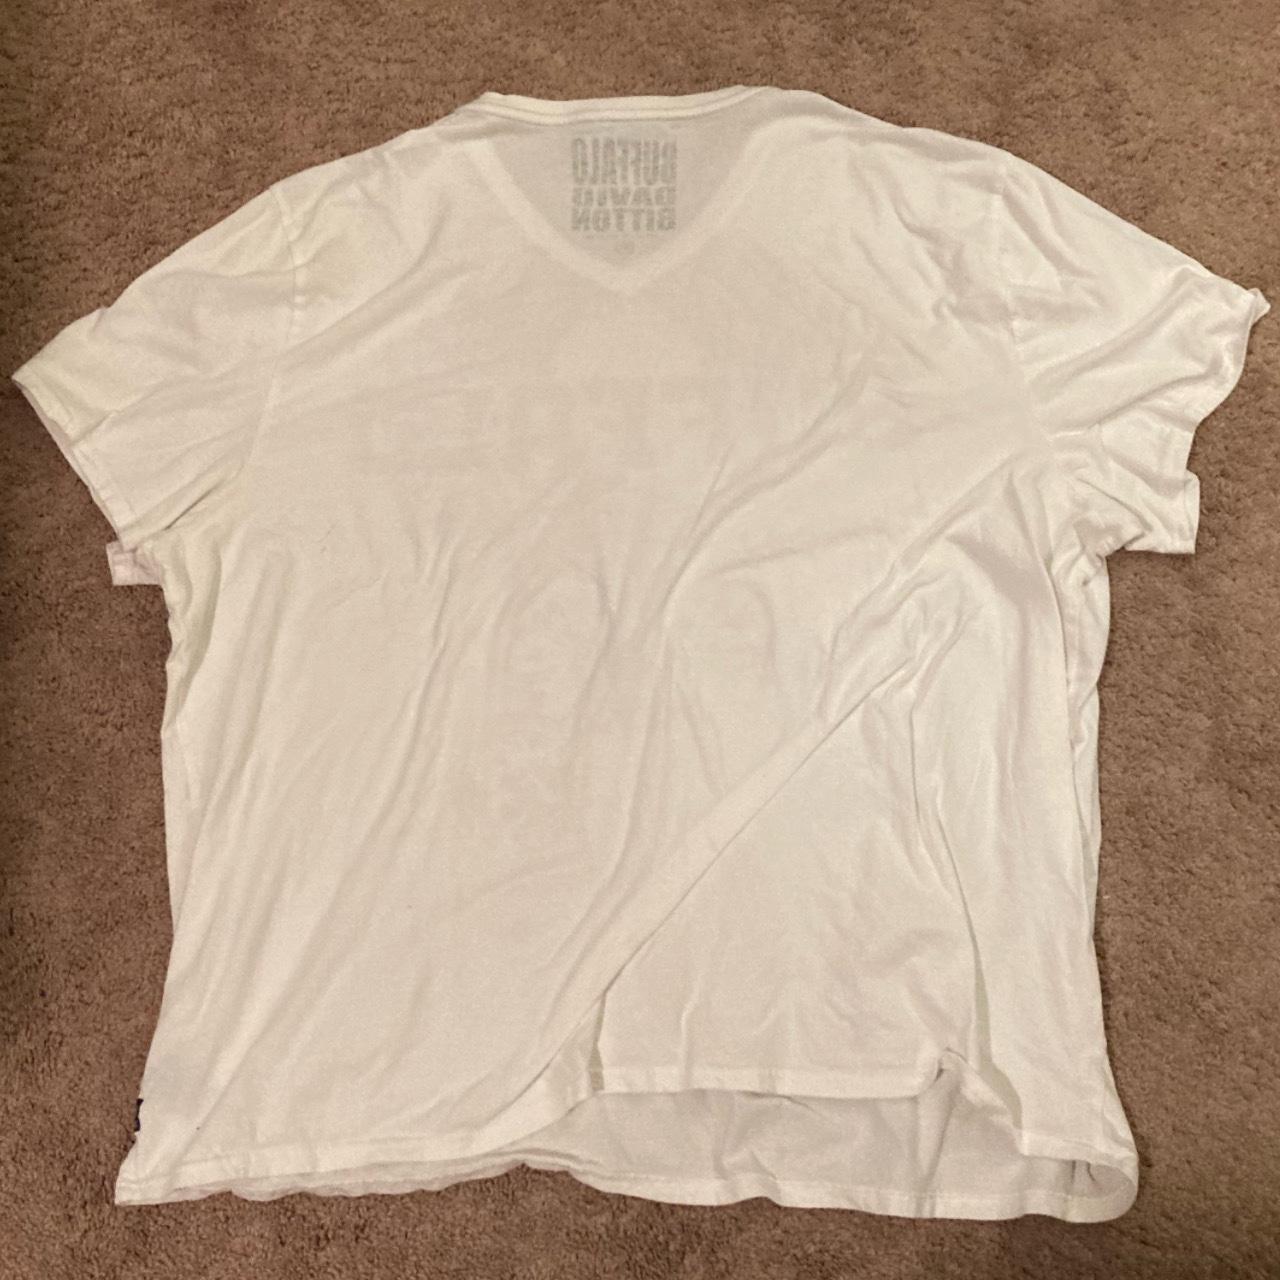 Buffalo David Bitton Men's White and Black T-shirt (2)